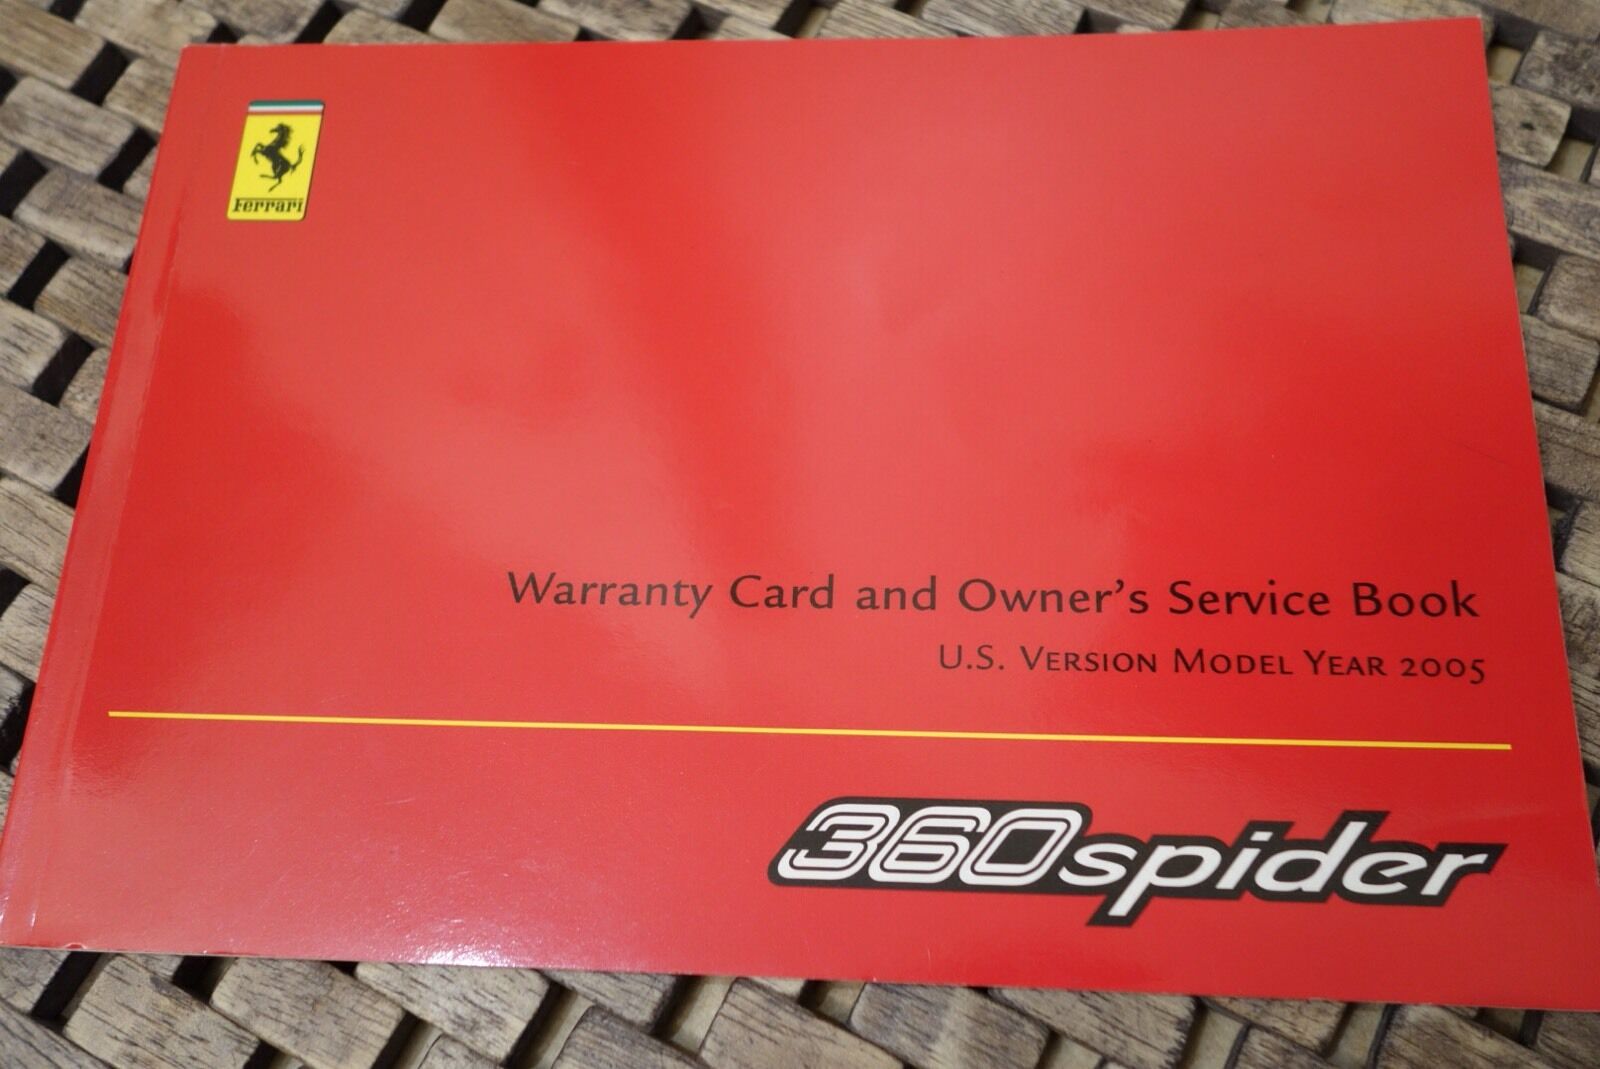 FERRARI 360 SPIDER WARRANTY CARD & SERVICE BOOK NO OWNERS MANUAL 2005